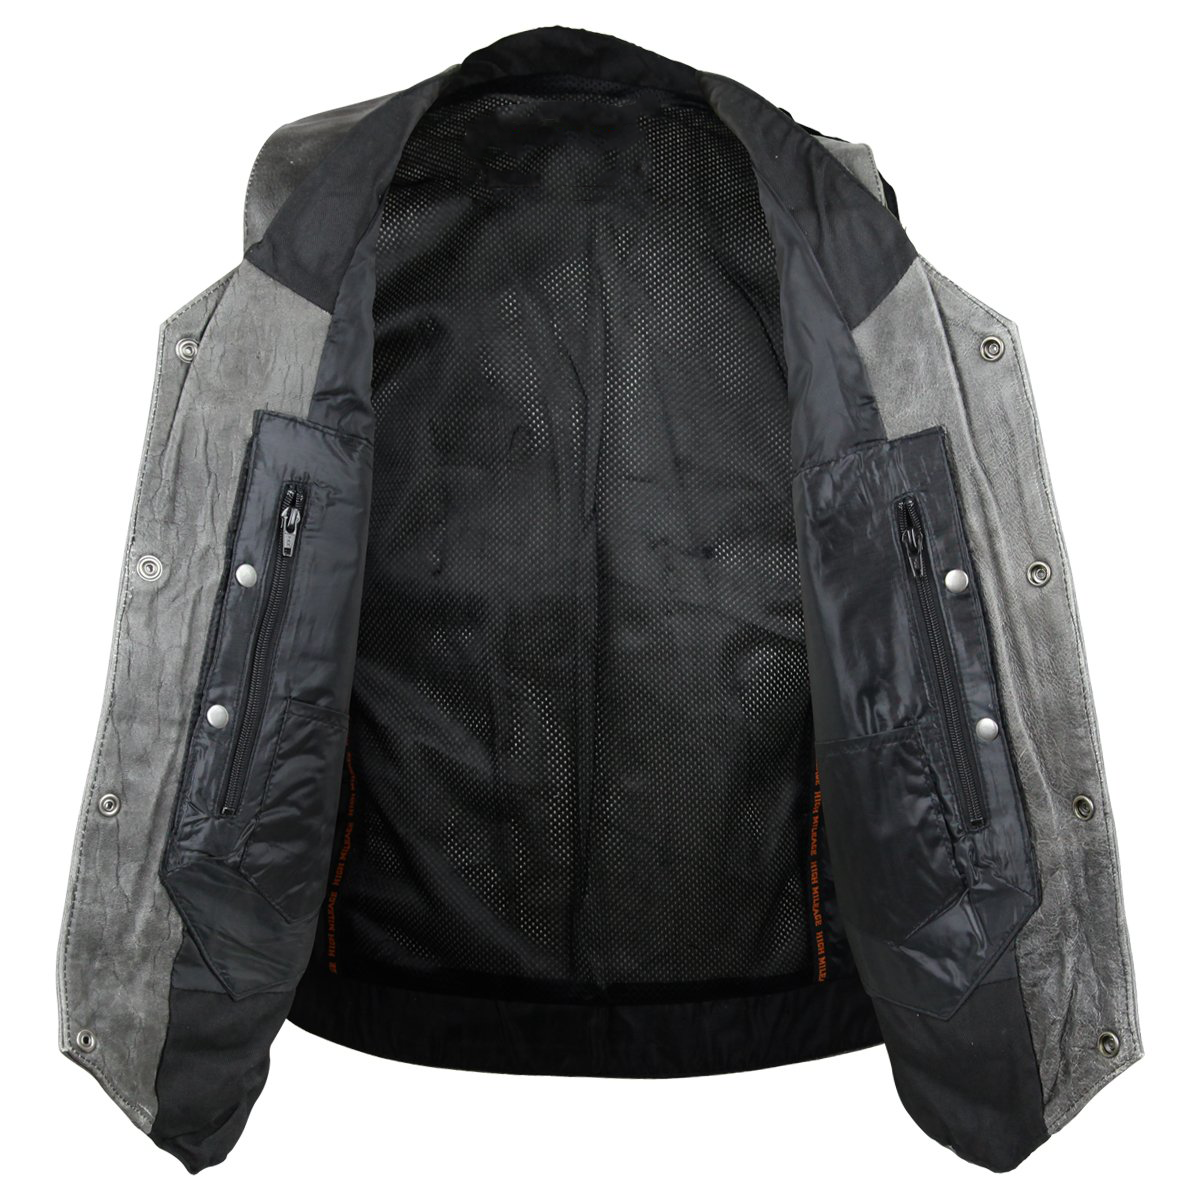 Distressed Grey Ten Pocket Cowhide Leather Vest wclapparel